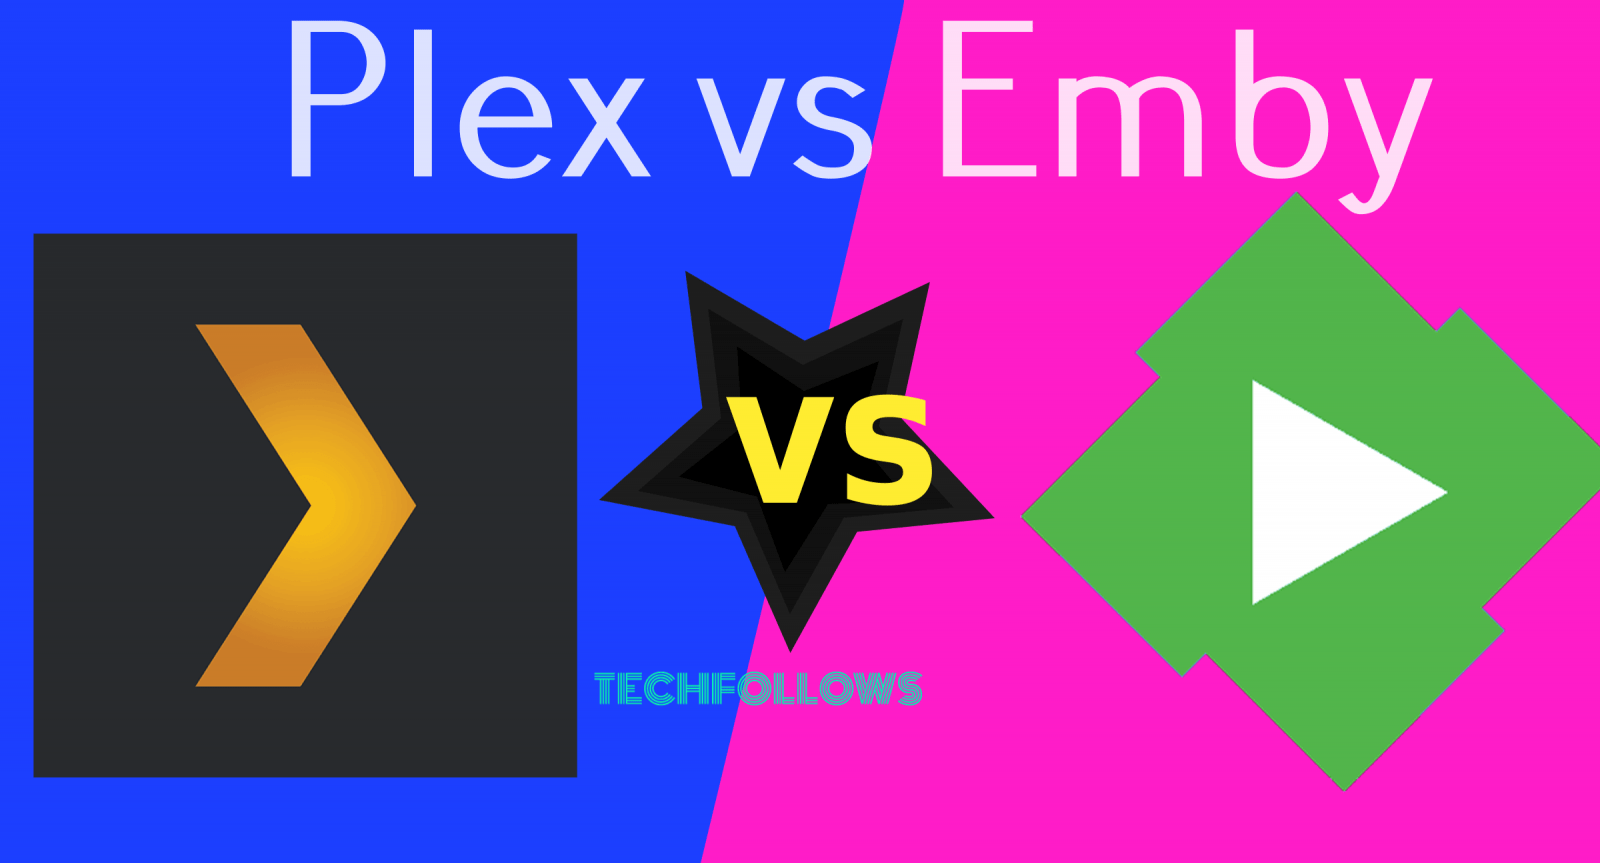 Plex vs Emby